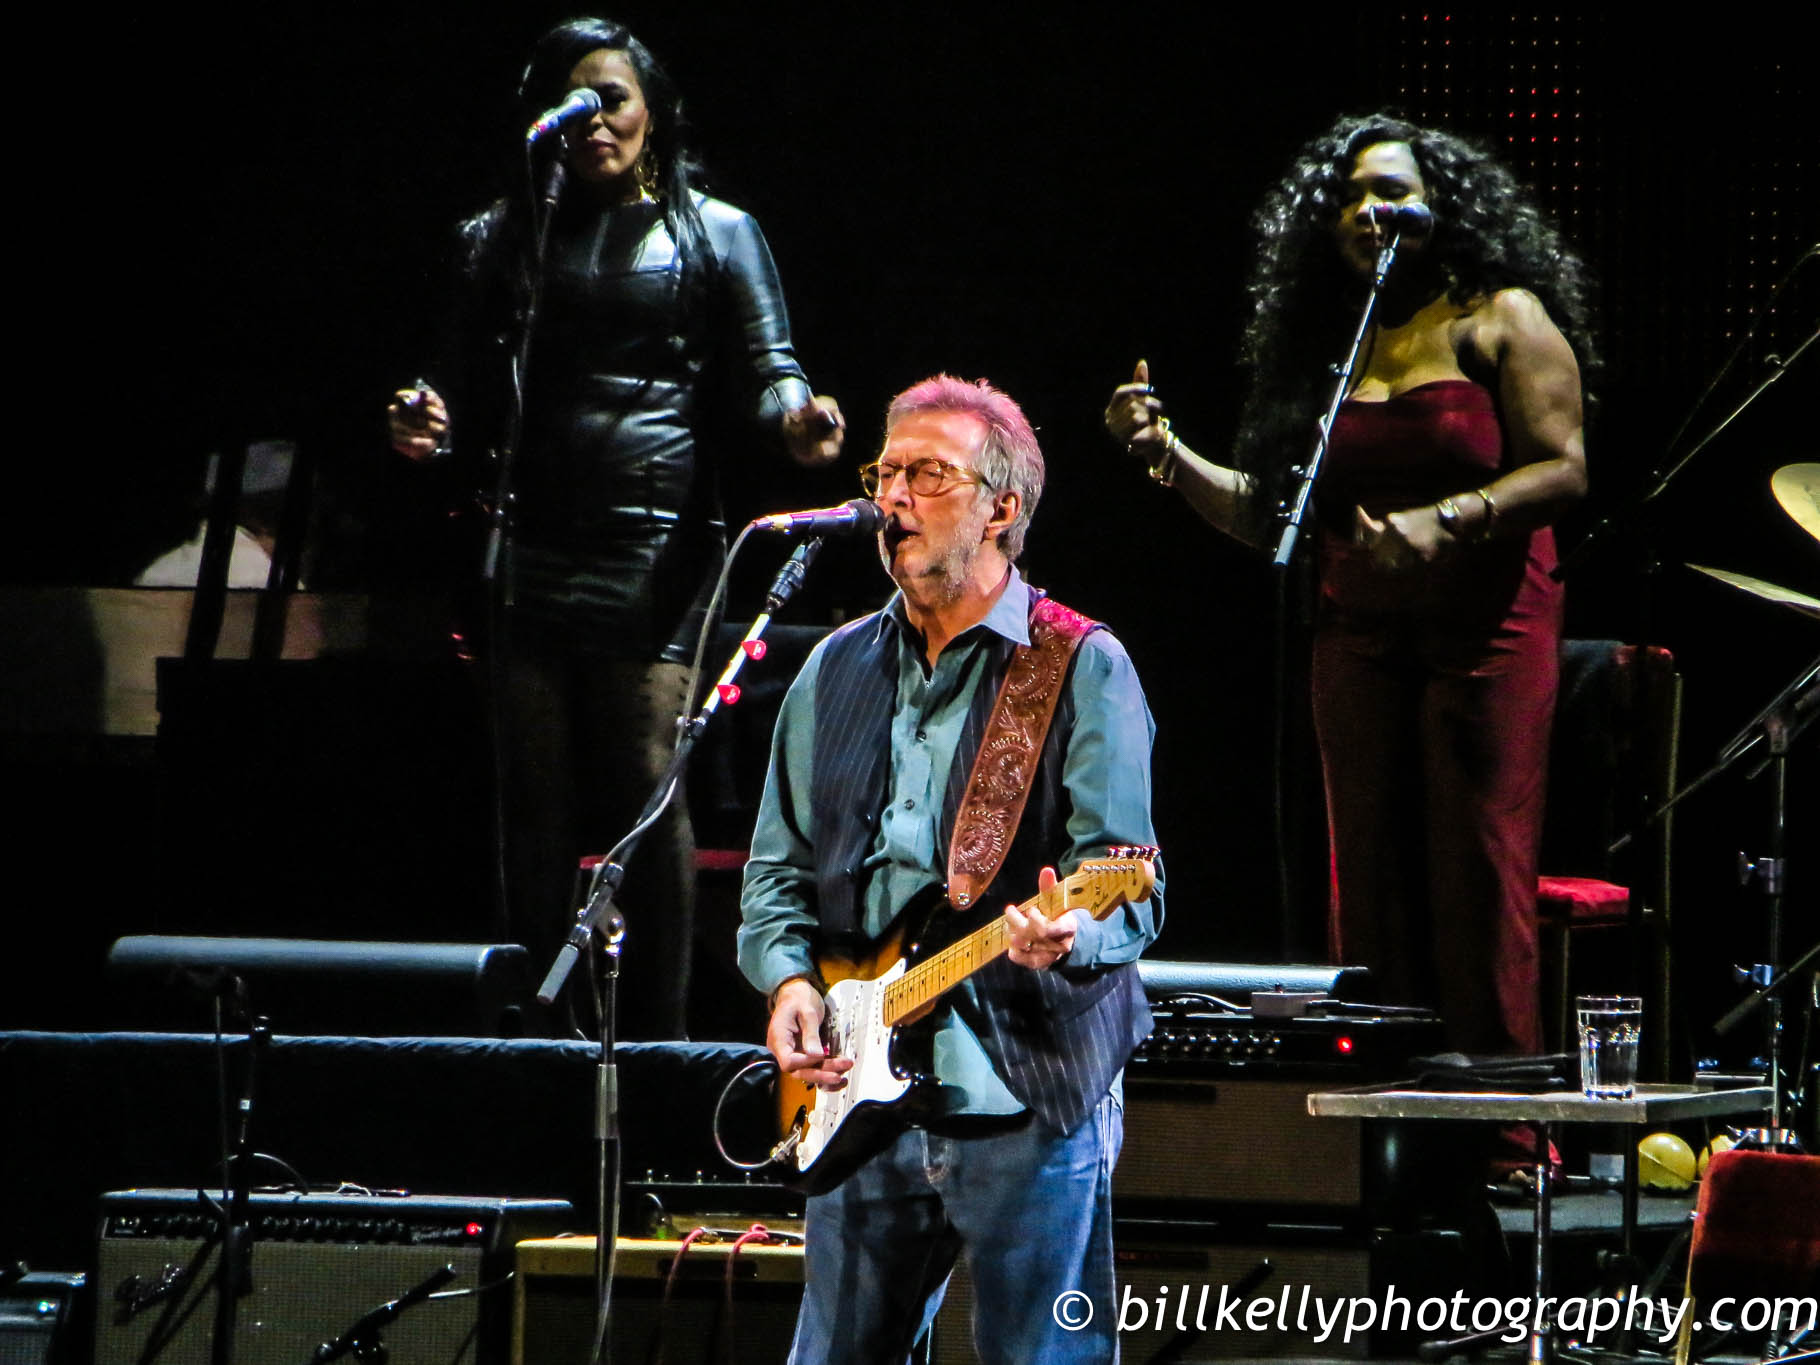 Eric Clapton Plots North American Tour Dates